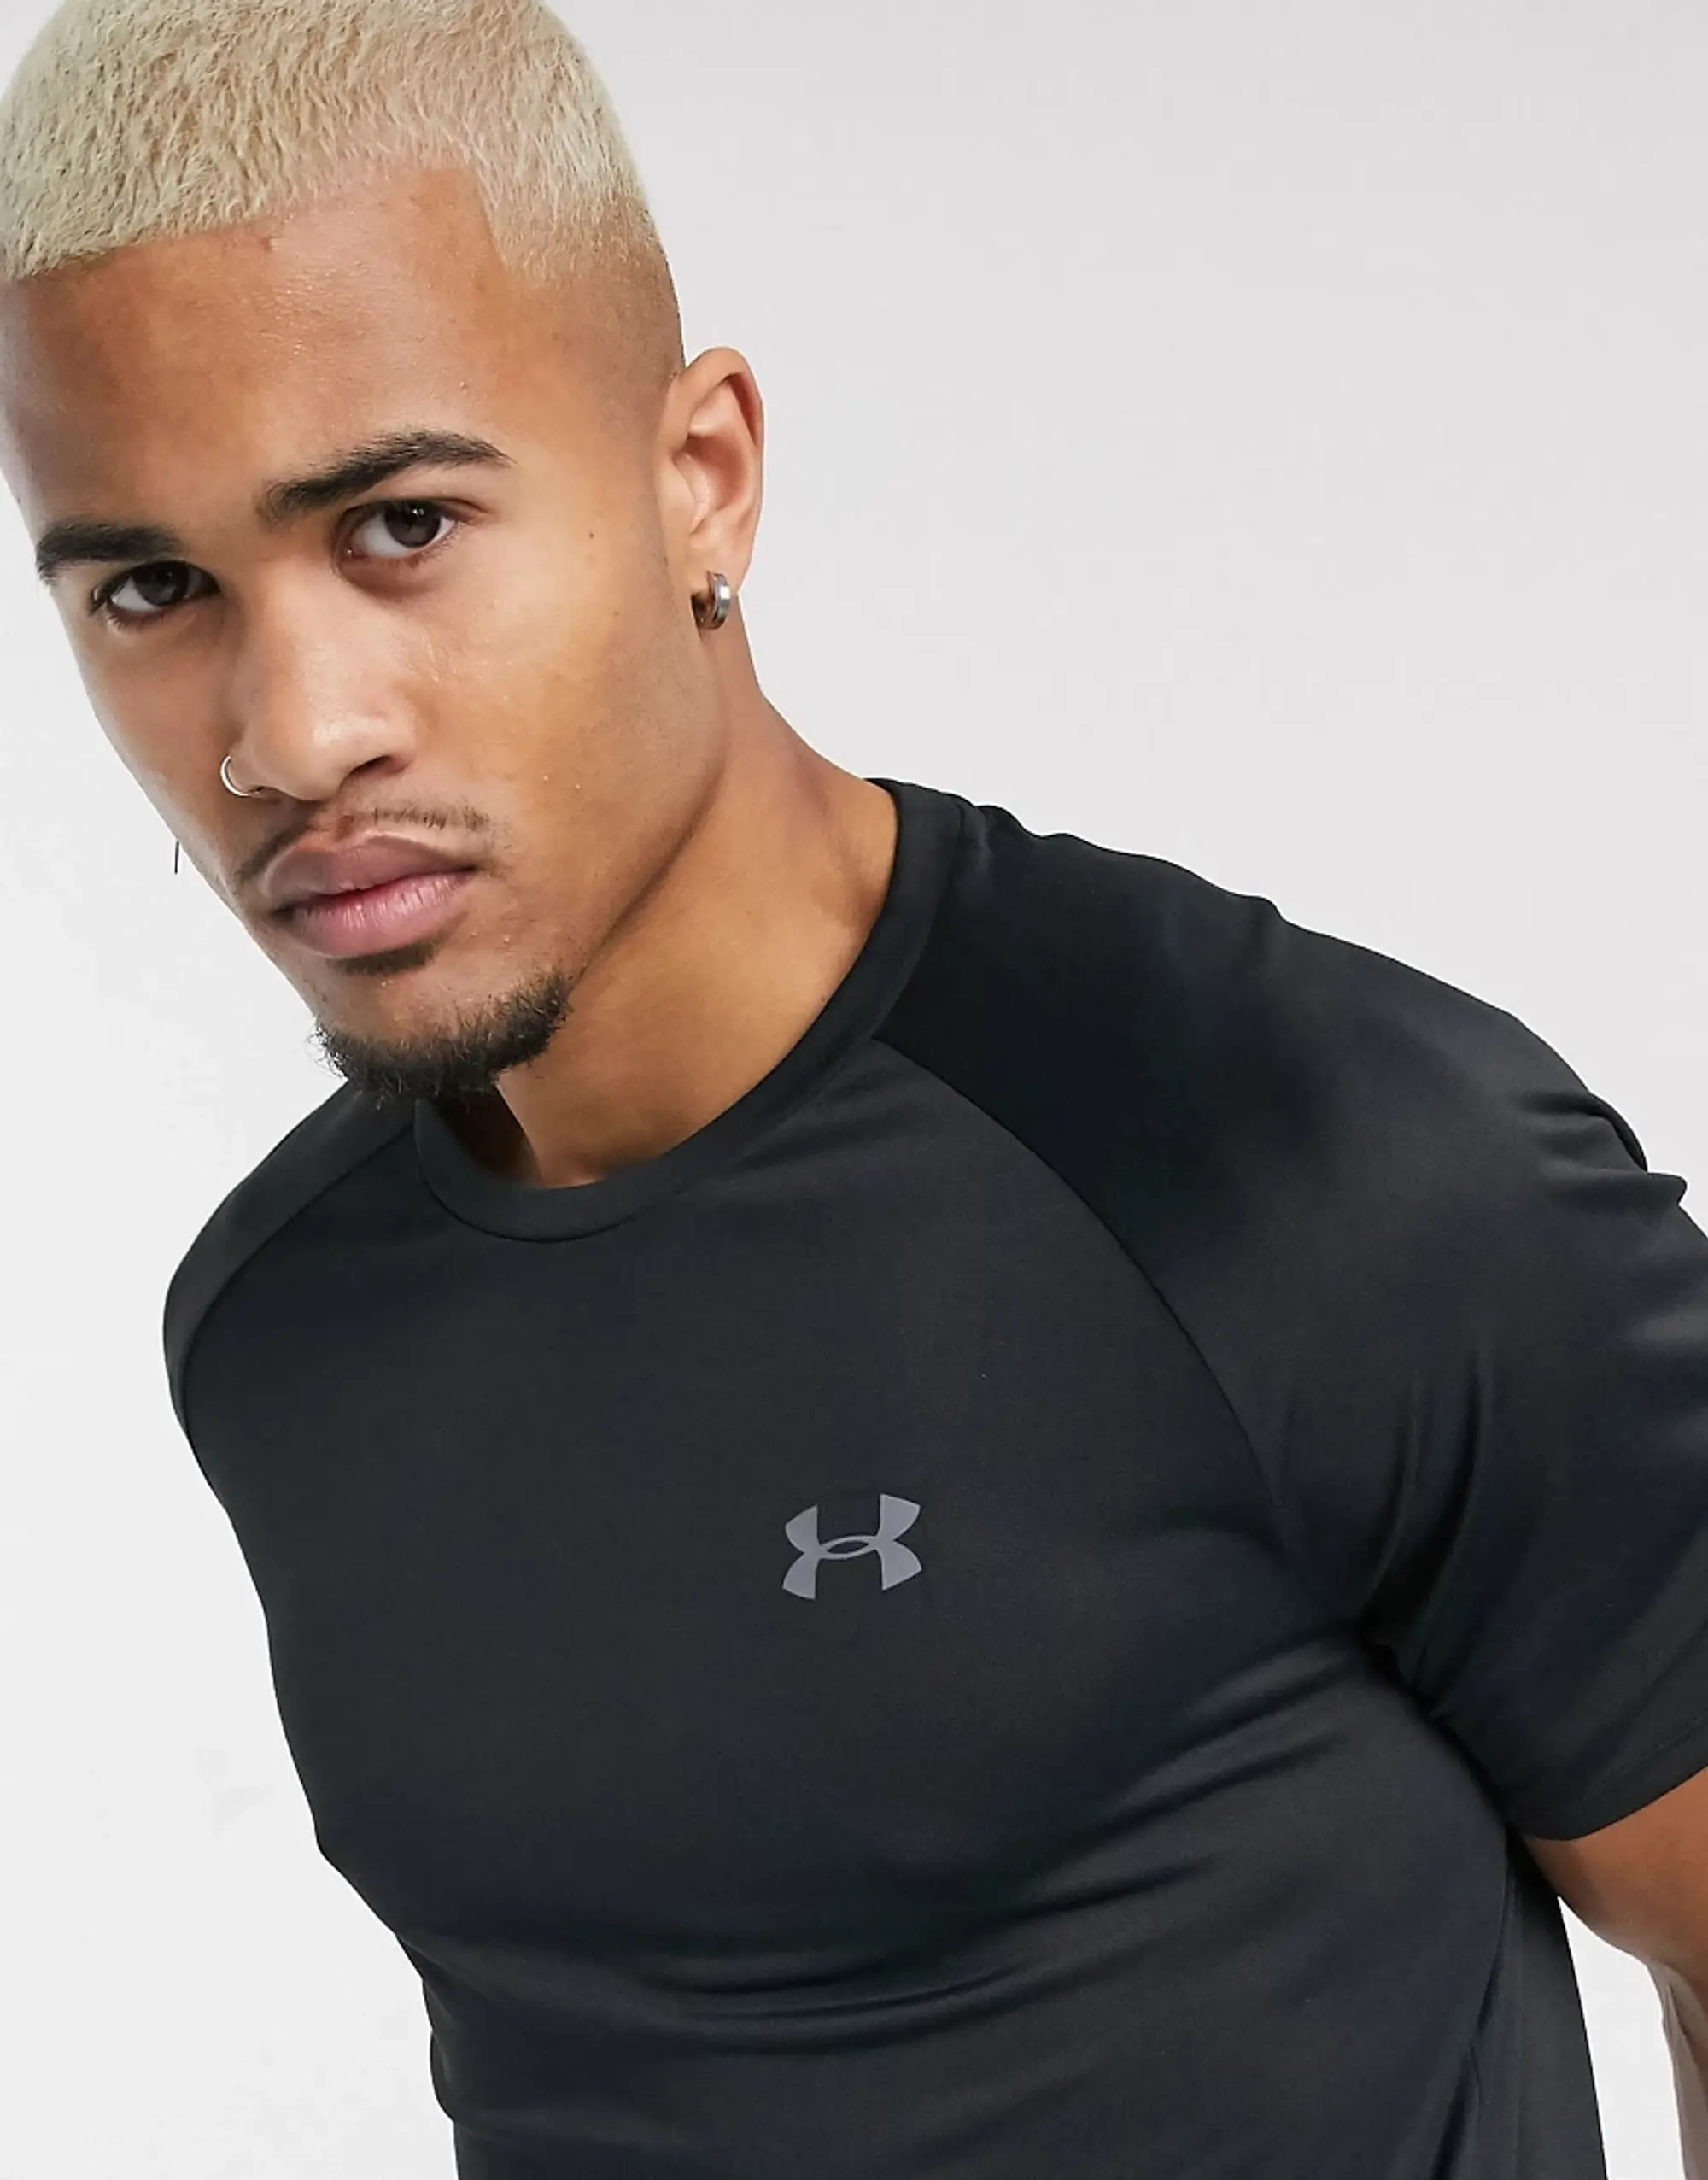 Men's  Under Armour  Tech™ 2.0 Short Sleeve Black / Graphite